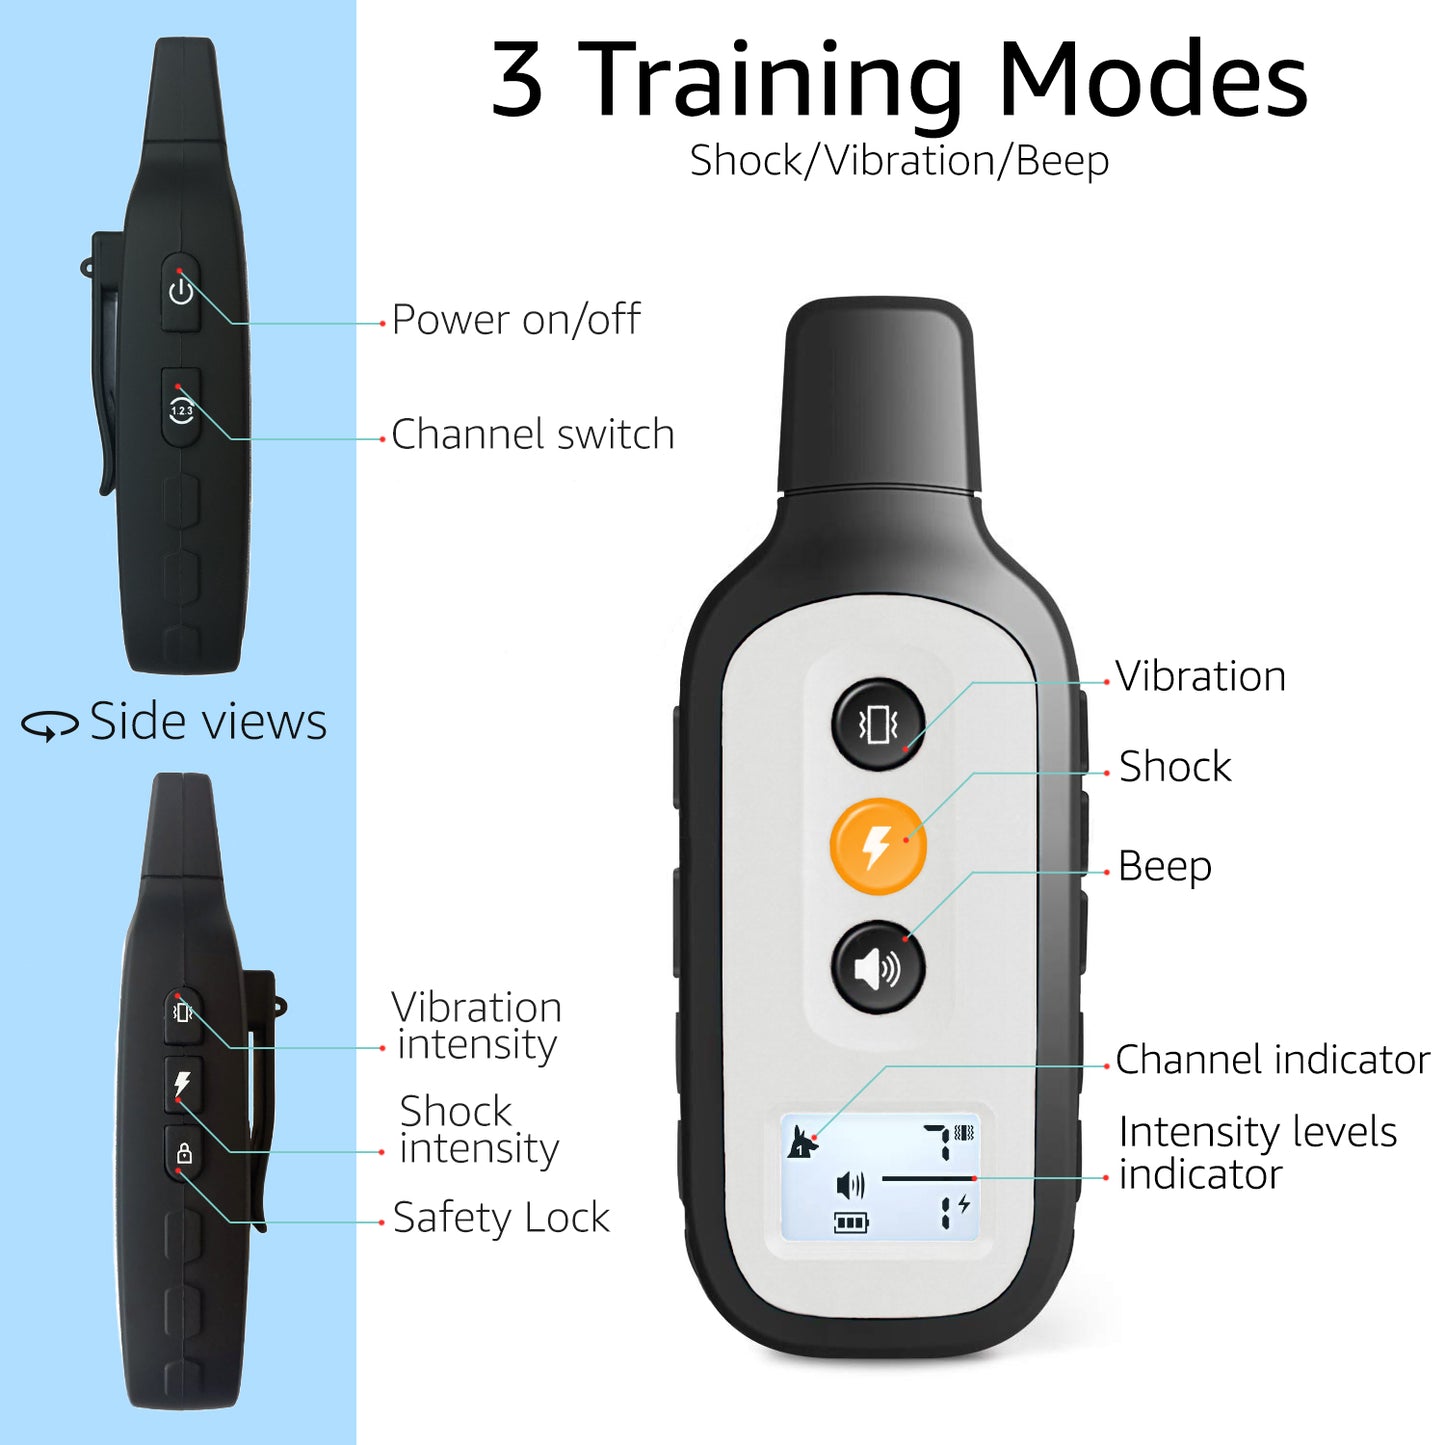 XPro remote has 3 training modes: shock,vibration,beep